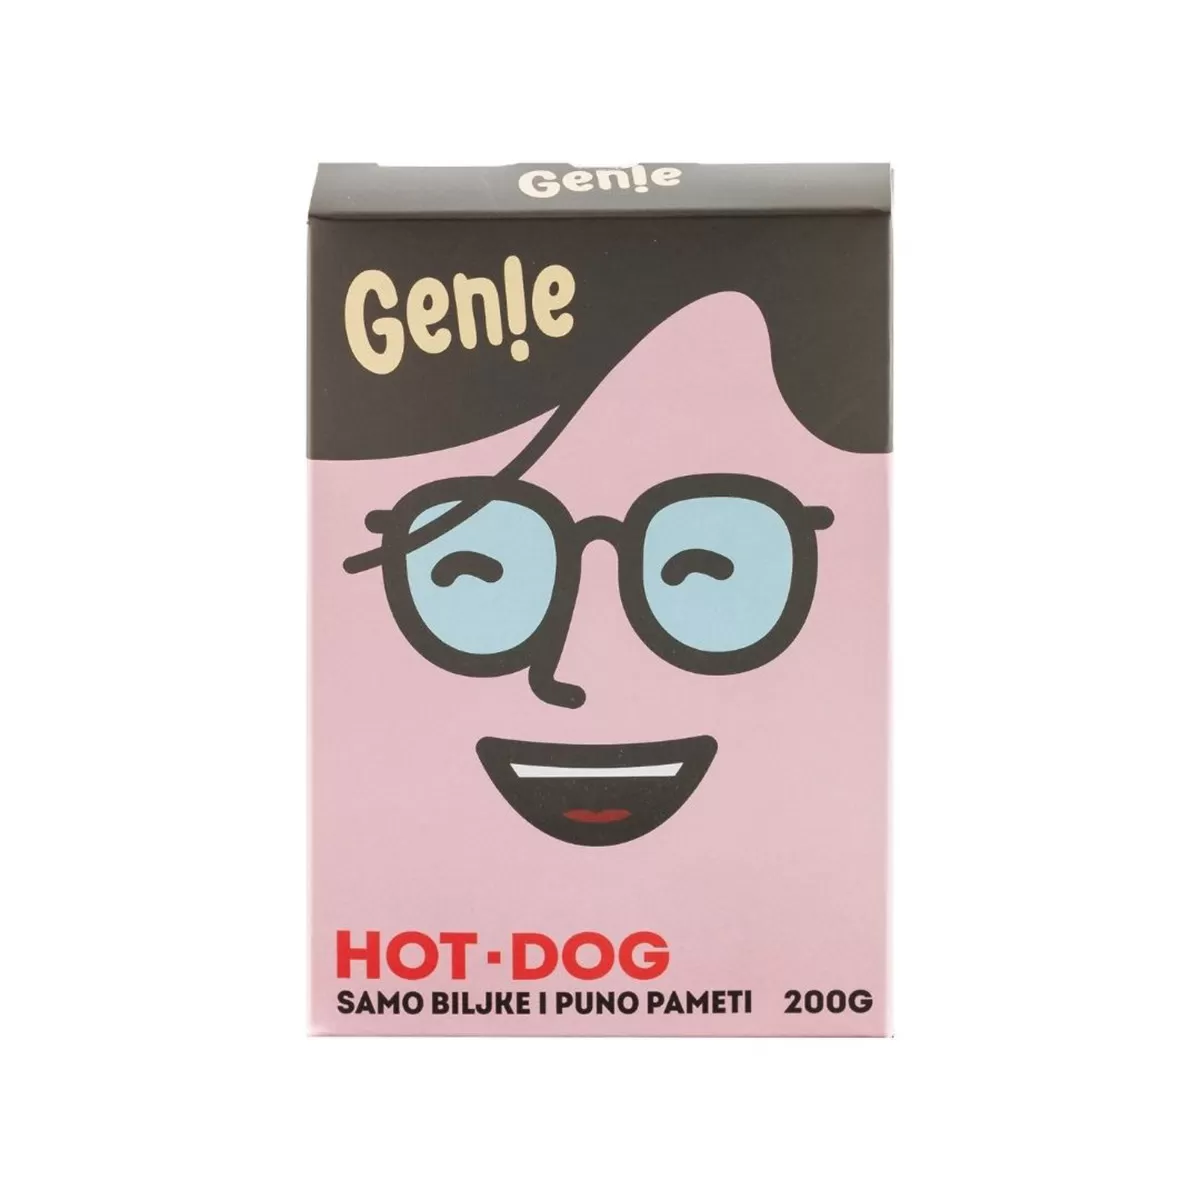 Genie hot dog 200g 